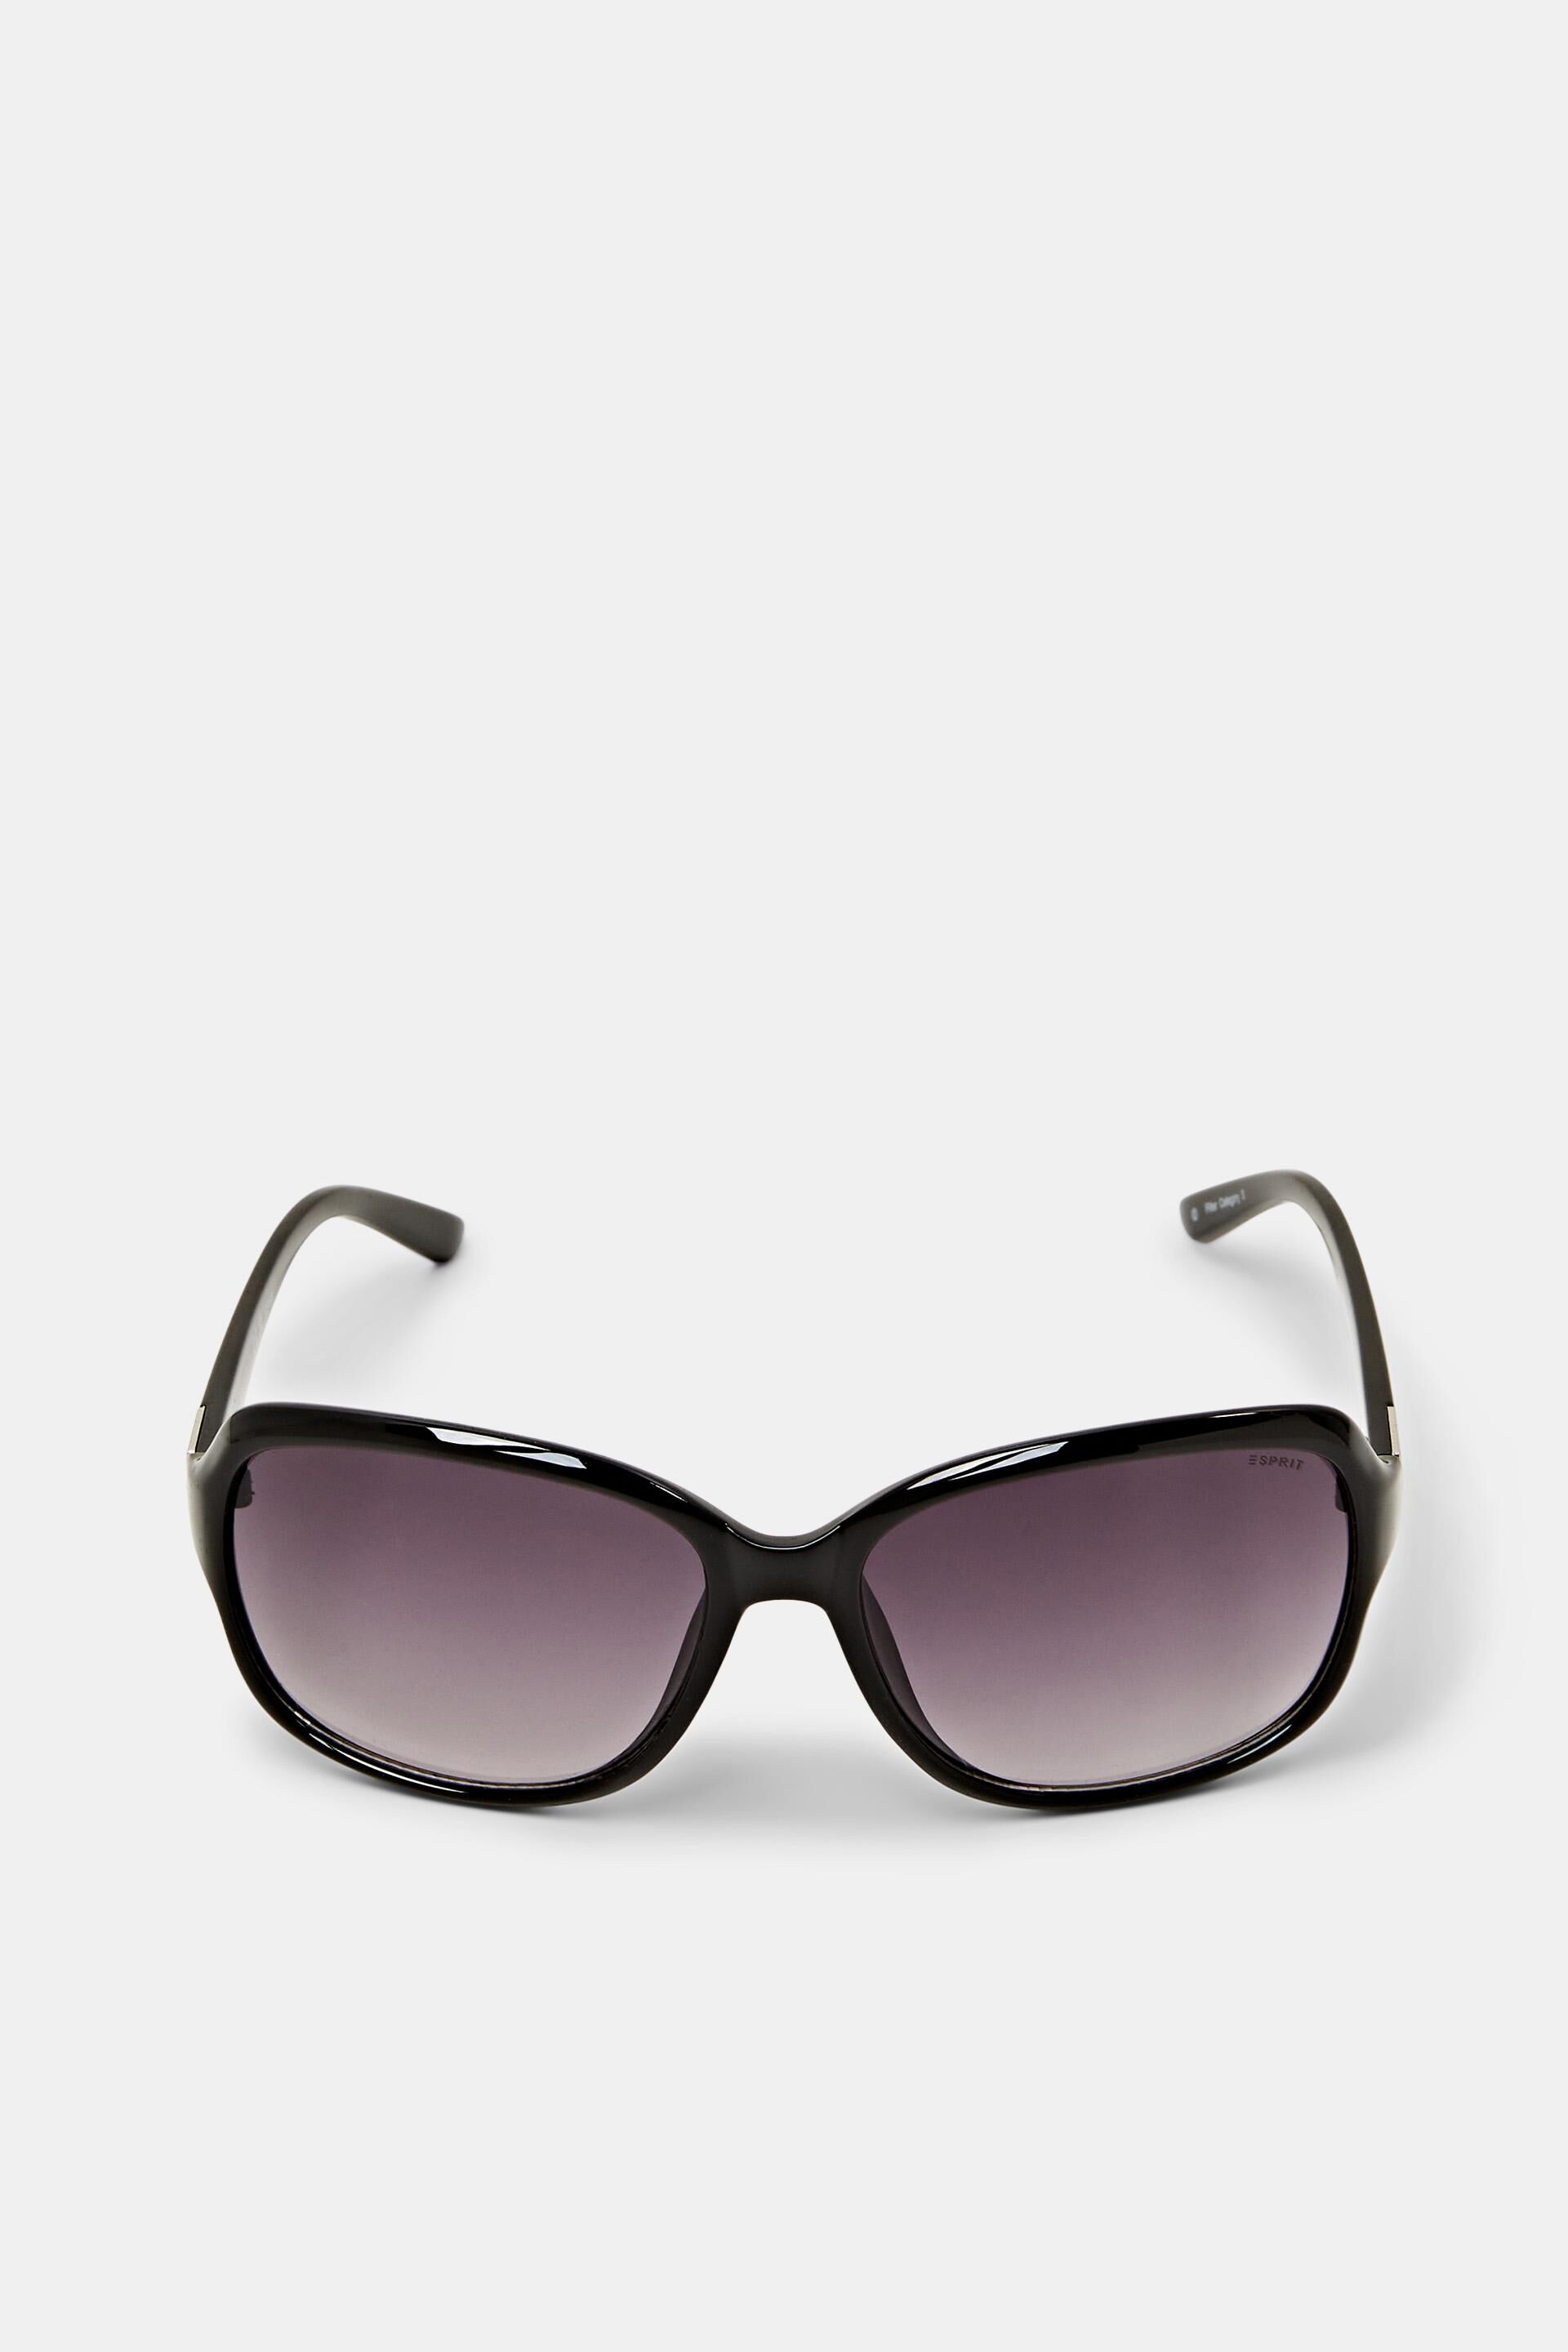 Esprit timeless design a with Sunglasses